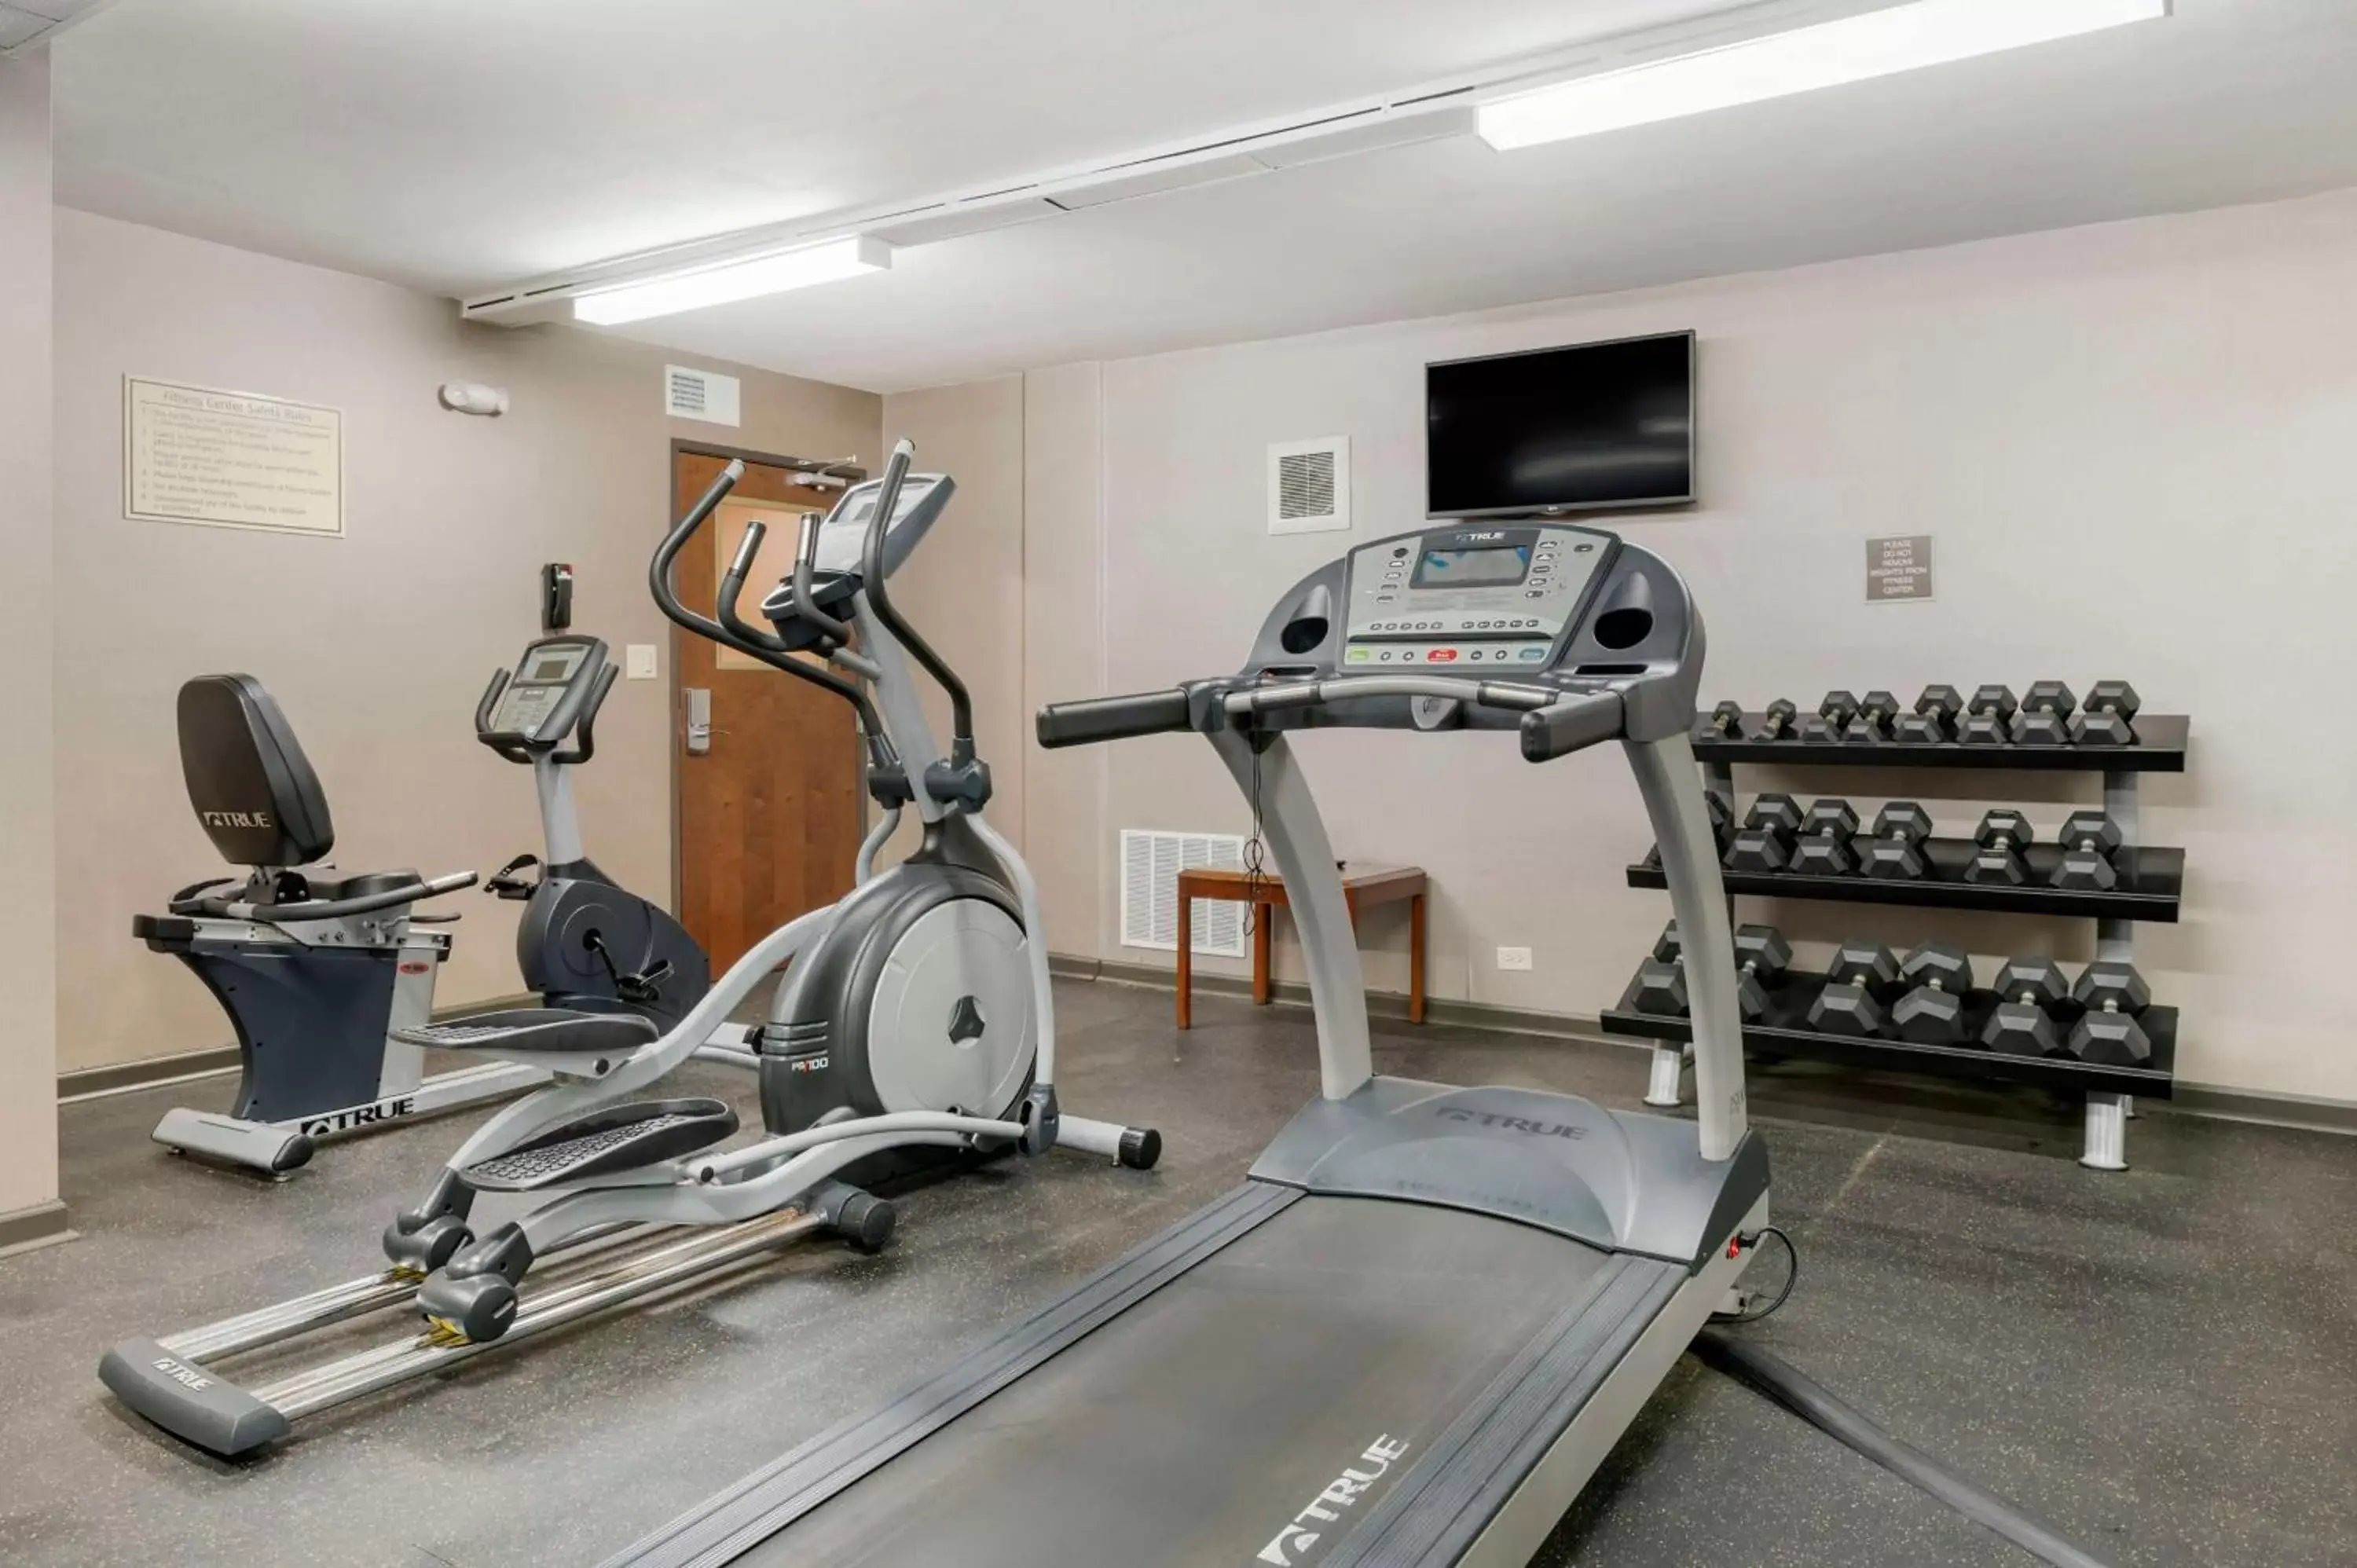 Fitness centre/facilities, Fitness Center/Facilities in Best Western University Inn at Valparaiso